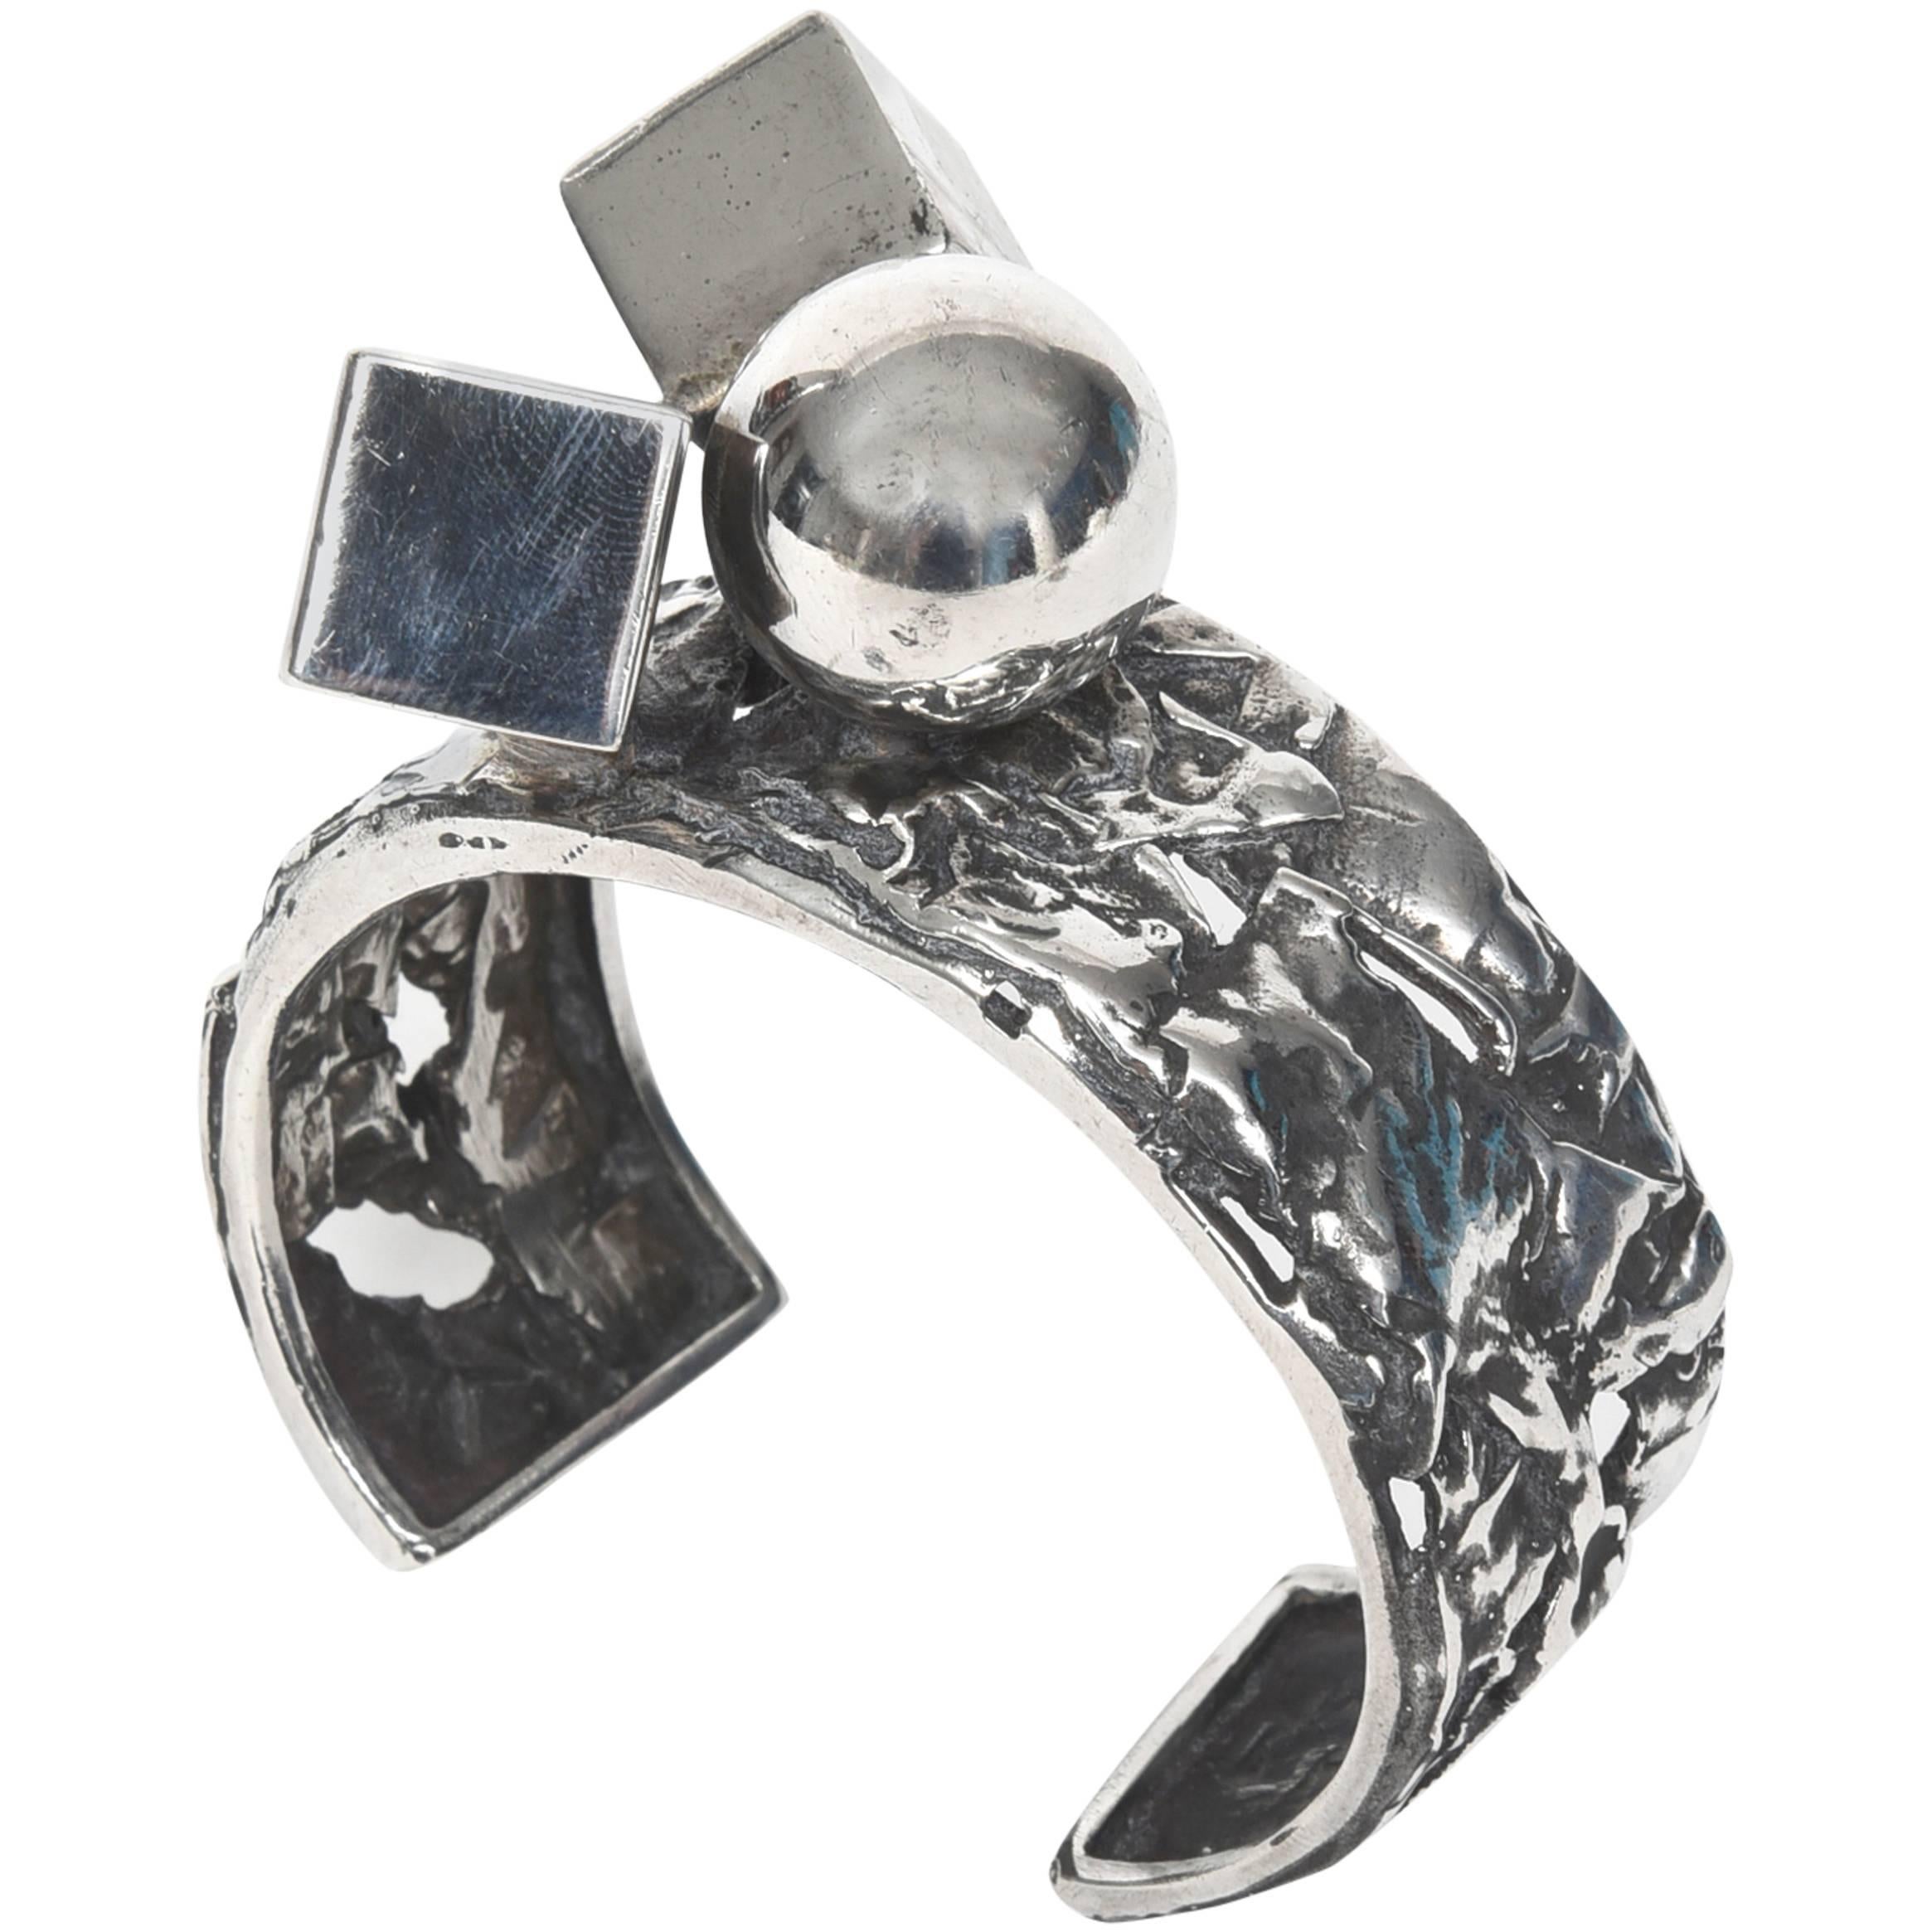 Modernist Brutalist Design Sterling Silver Cuff Bracelet by Rachel Gera